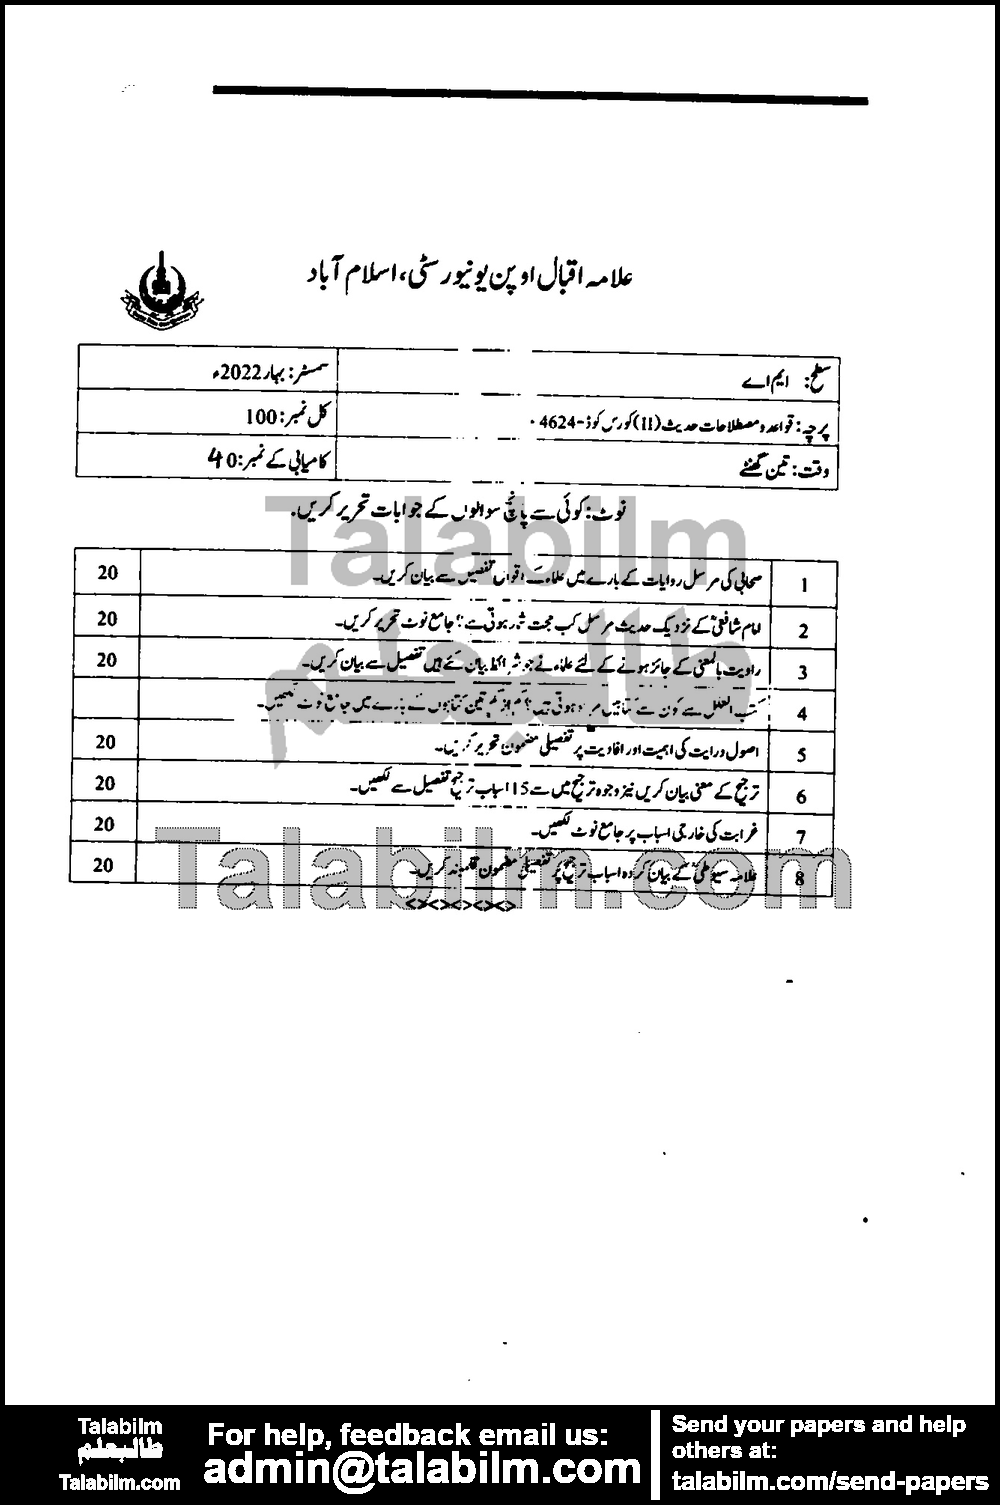 Al-Qawaid Fil Hadith-II 4624 past paper for Spring 2022